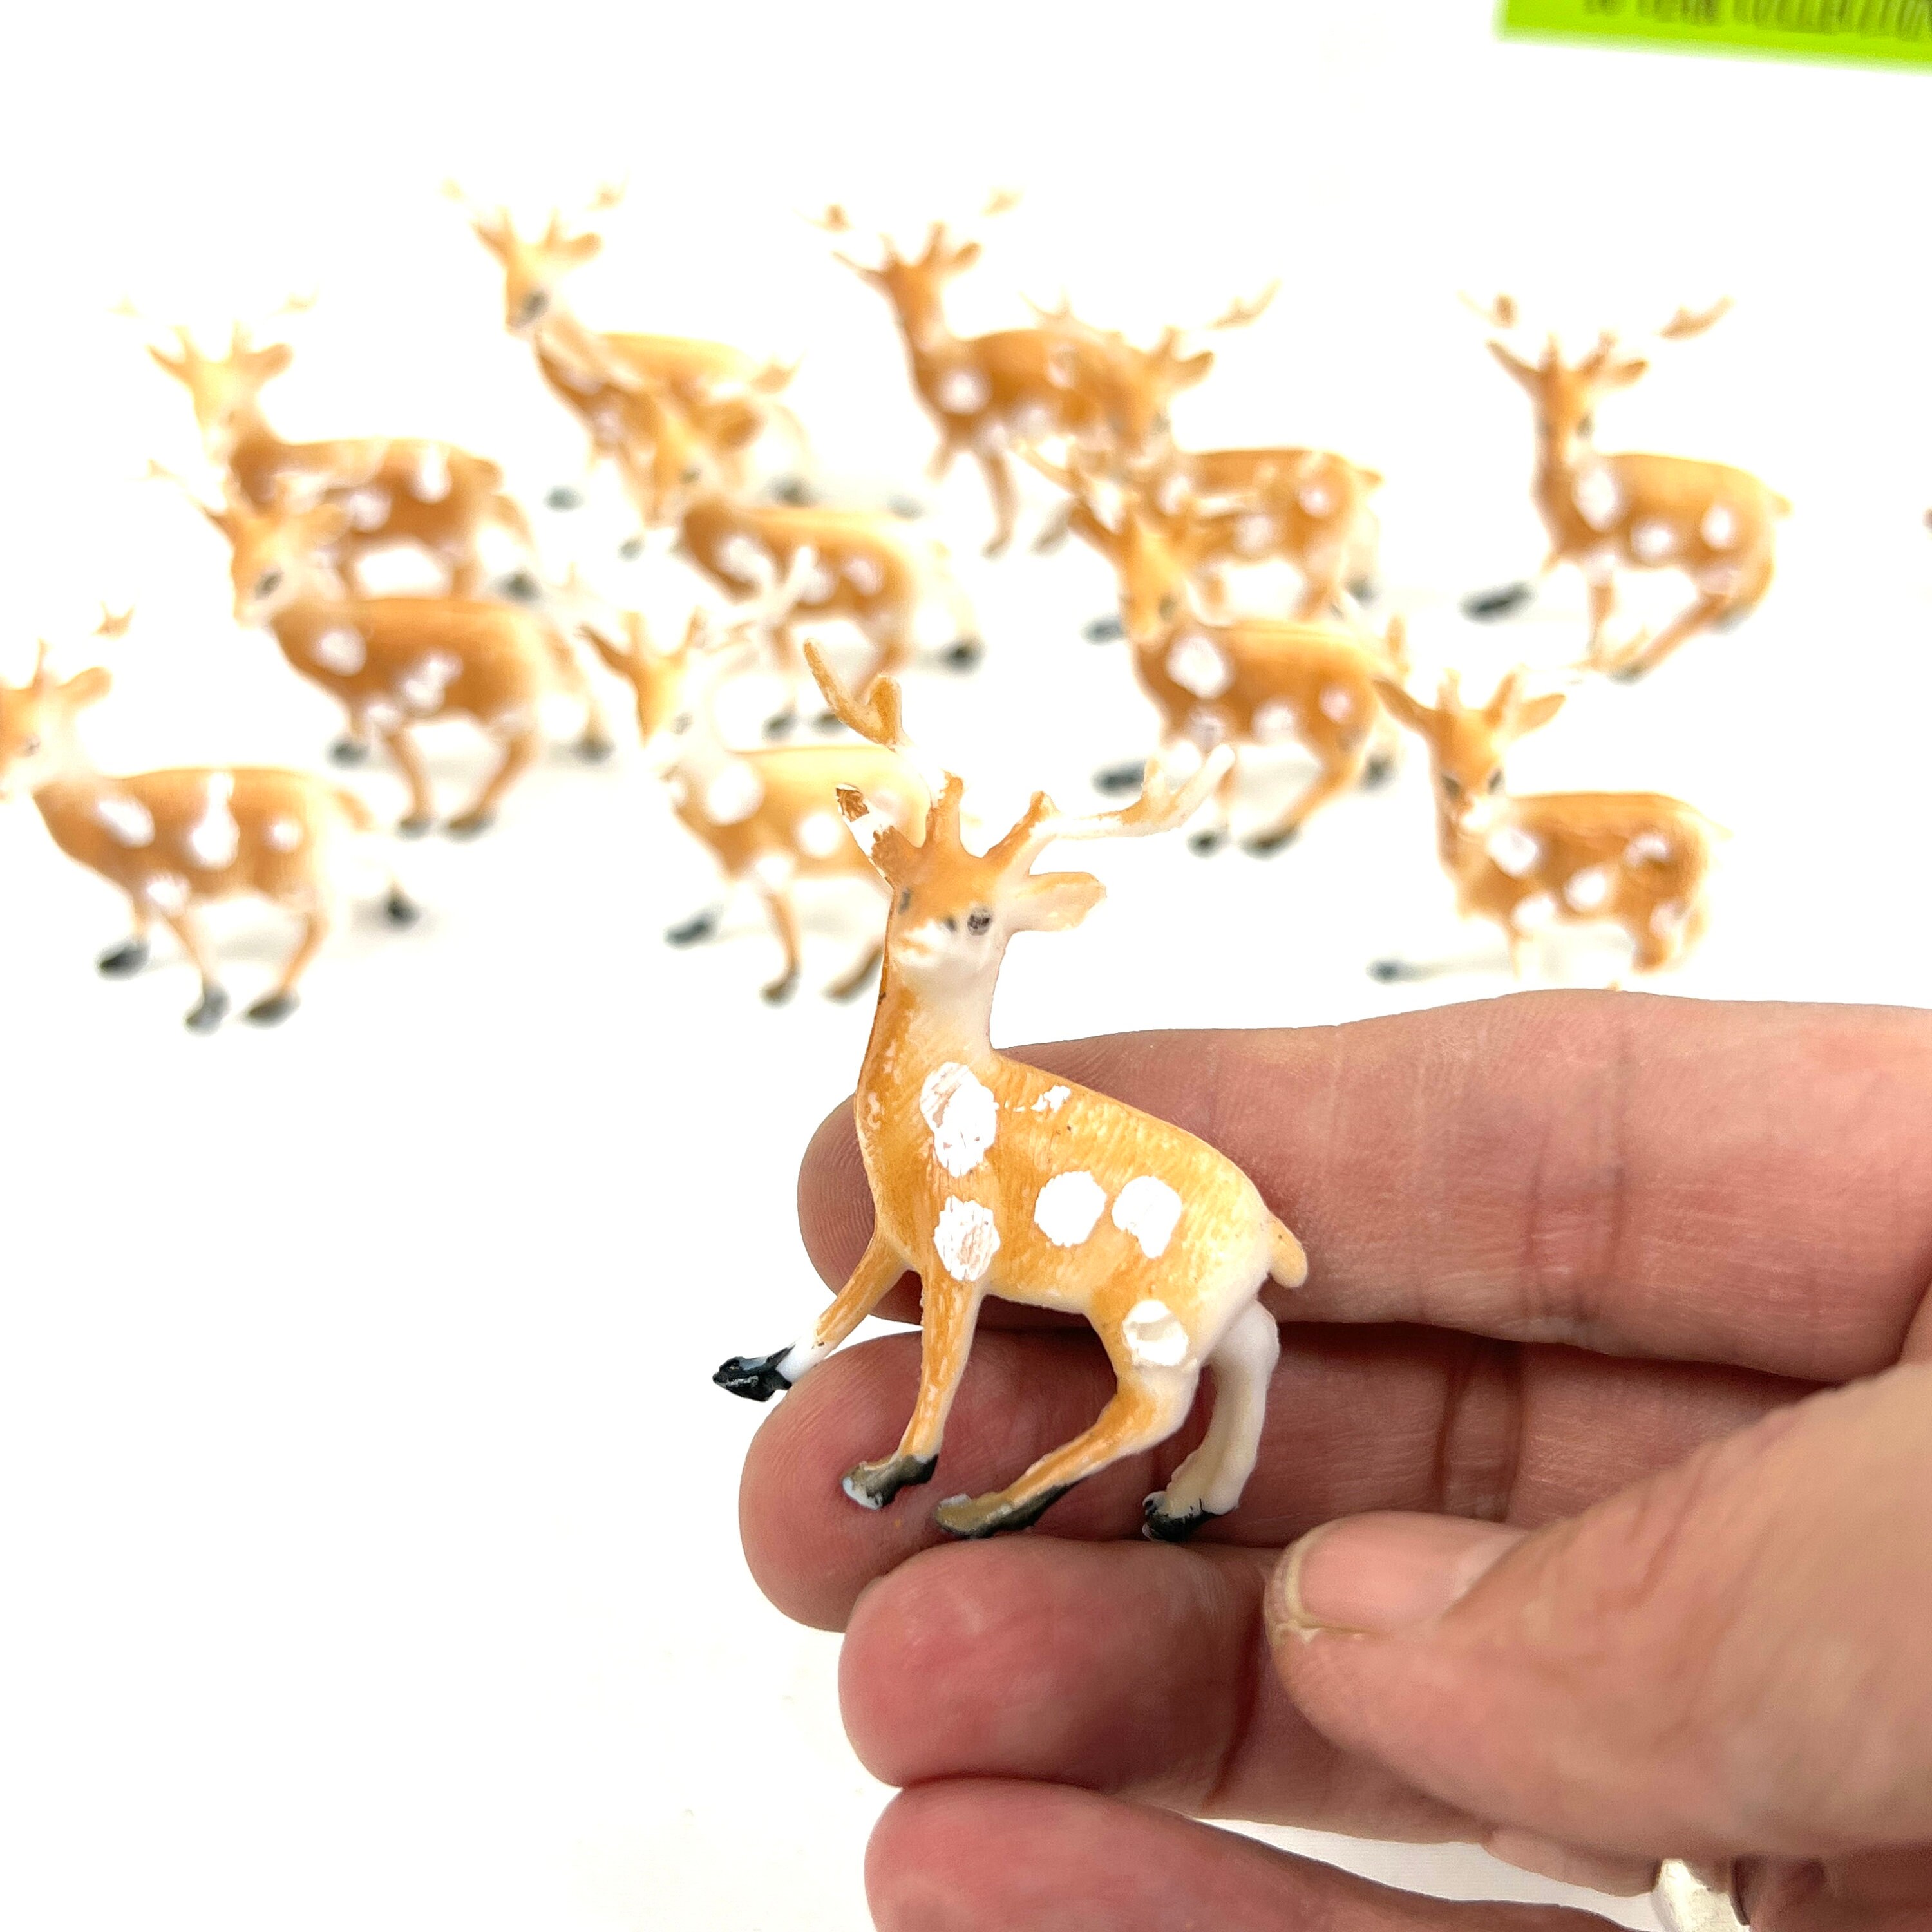 Abaodam 4 Sets Micro Landscape Deer Mushroom Decor Toys Little Animals  Figures Dog Figurine Small Animal Figurines Toy Dog Micro Figures Dog  Figures